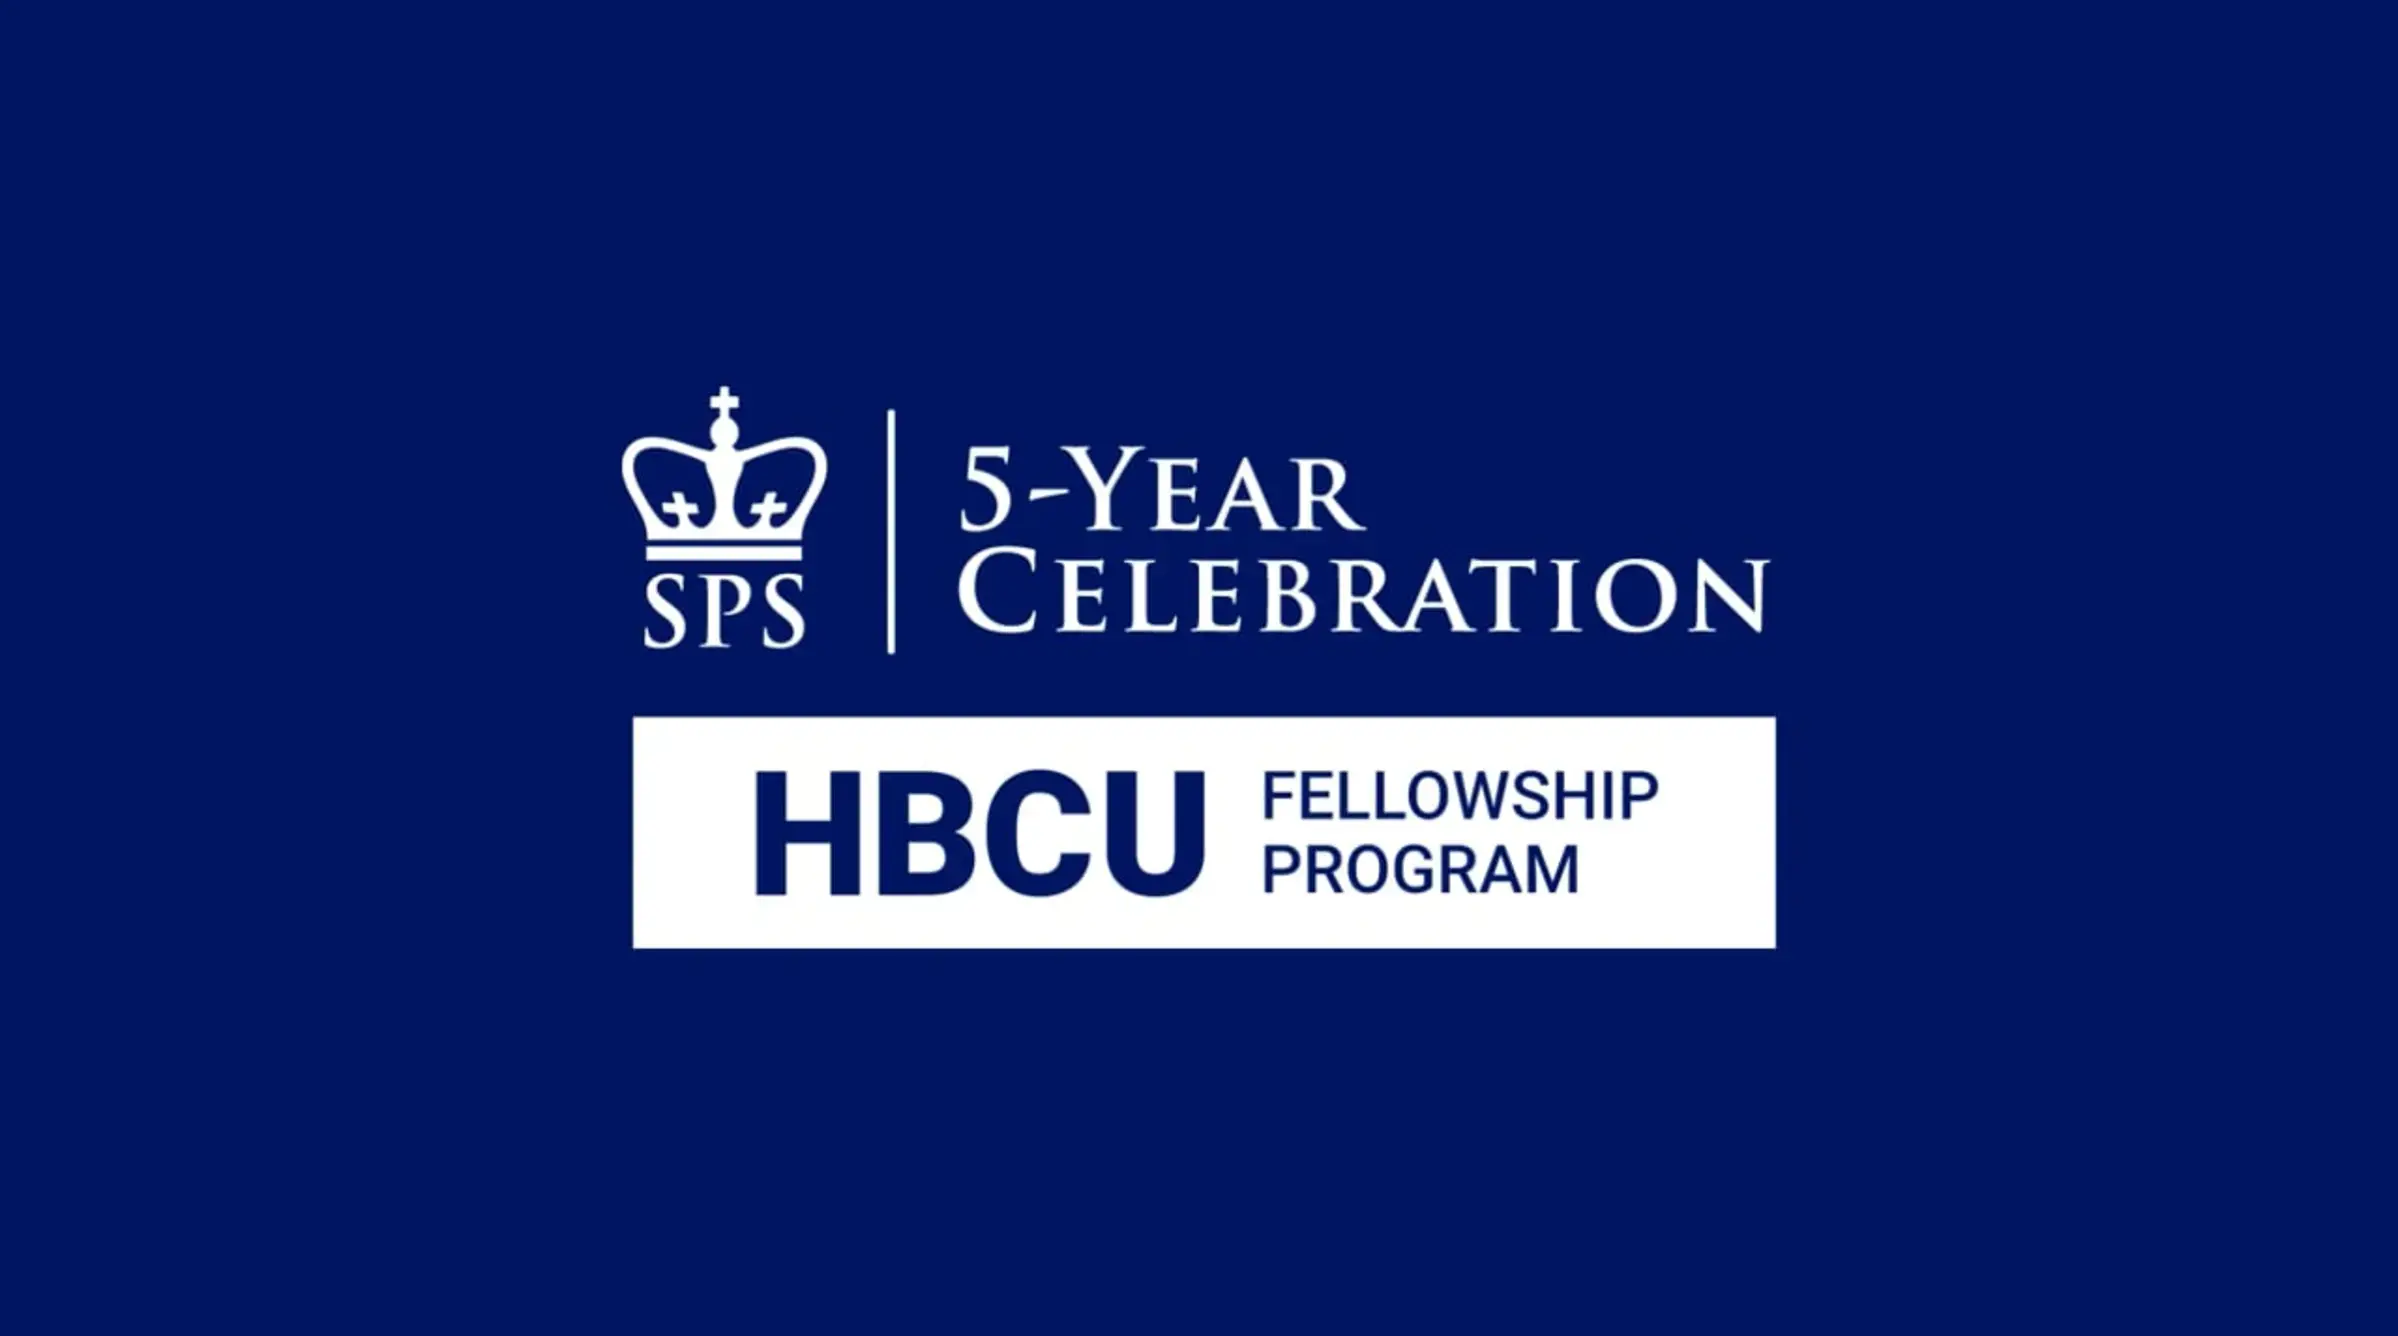 The Columbia University HBCU Fellowship Program 5-Year Celebration